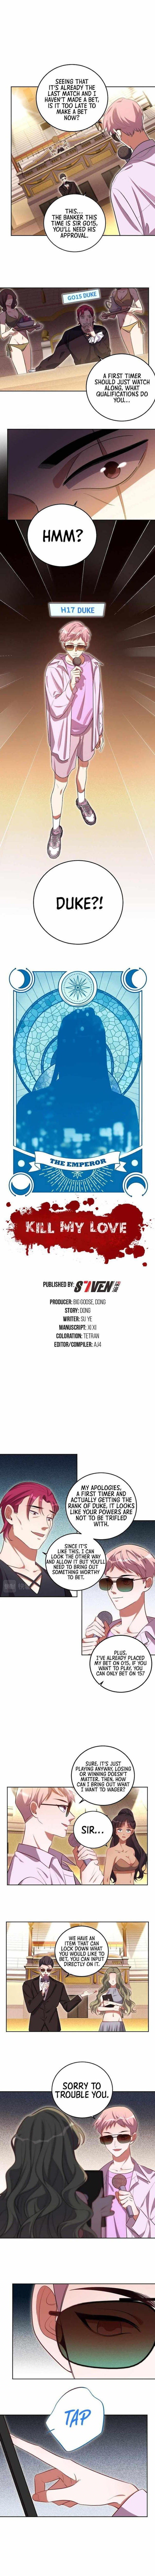 Kill My Love 81 1